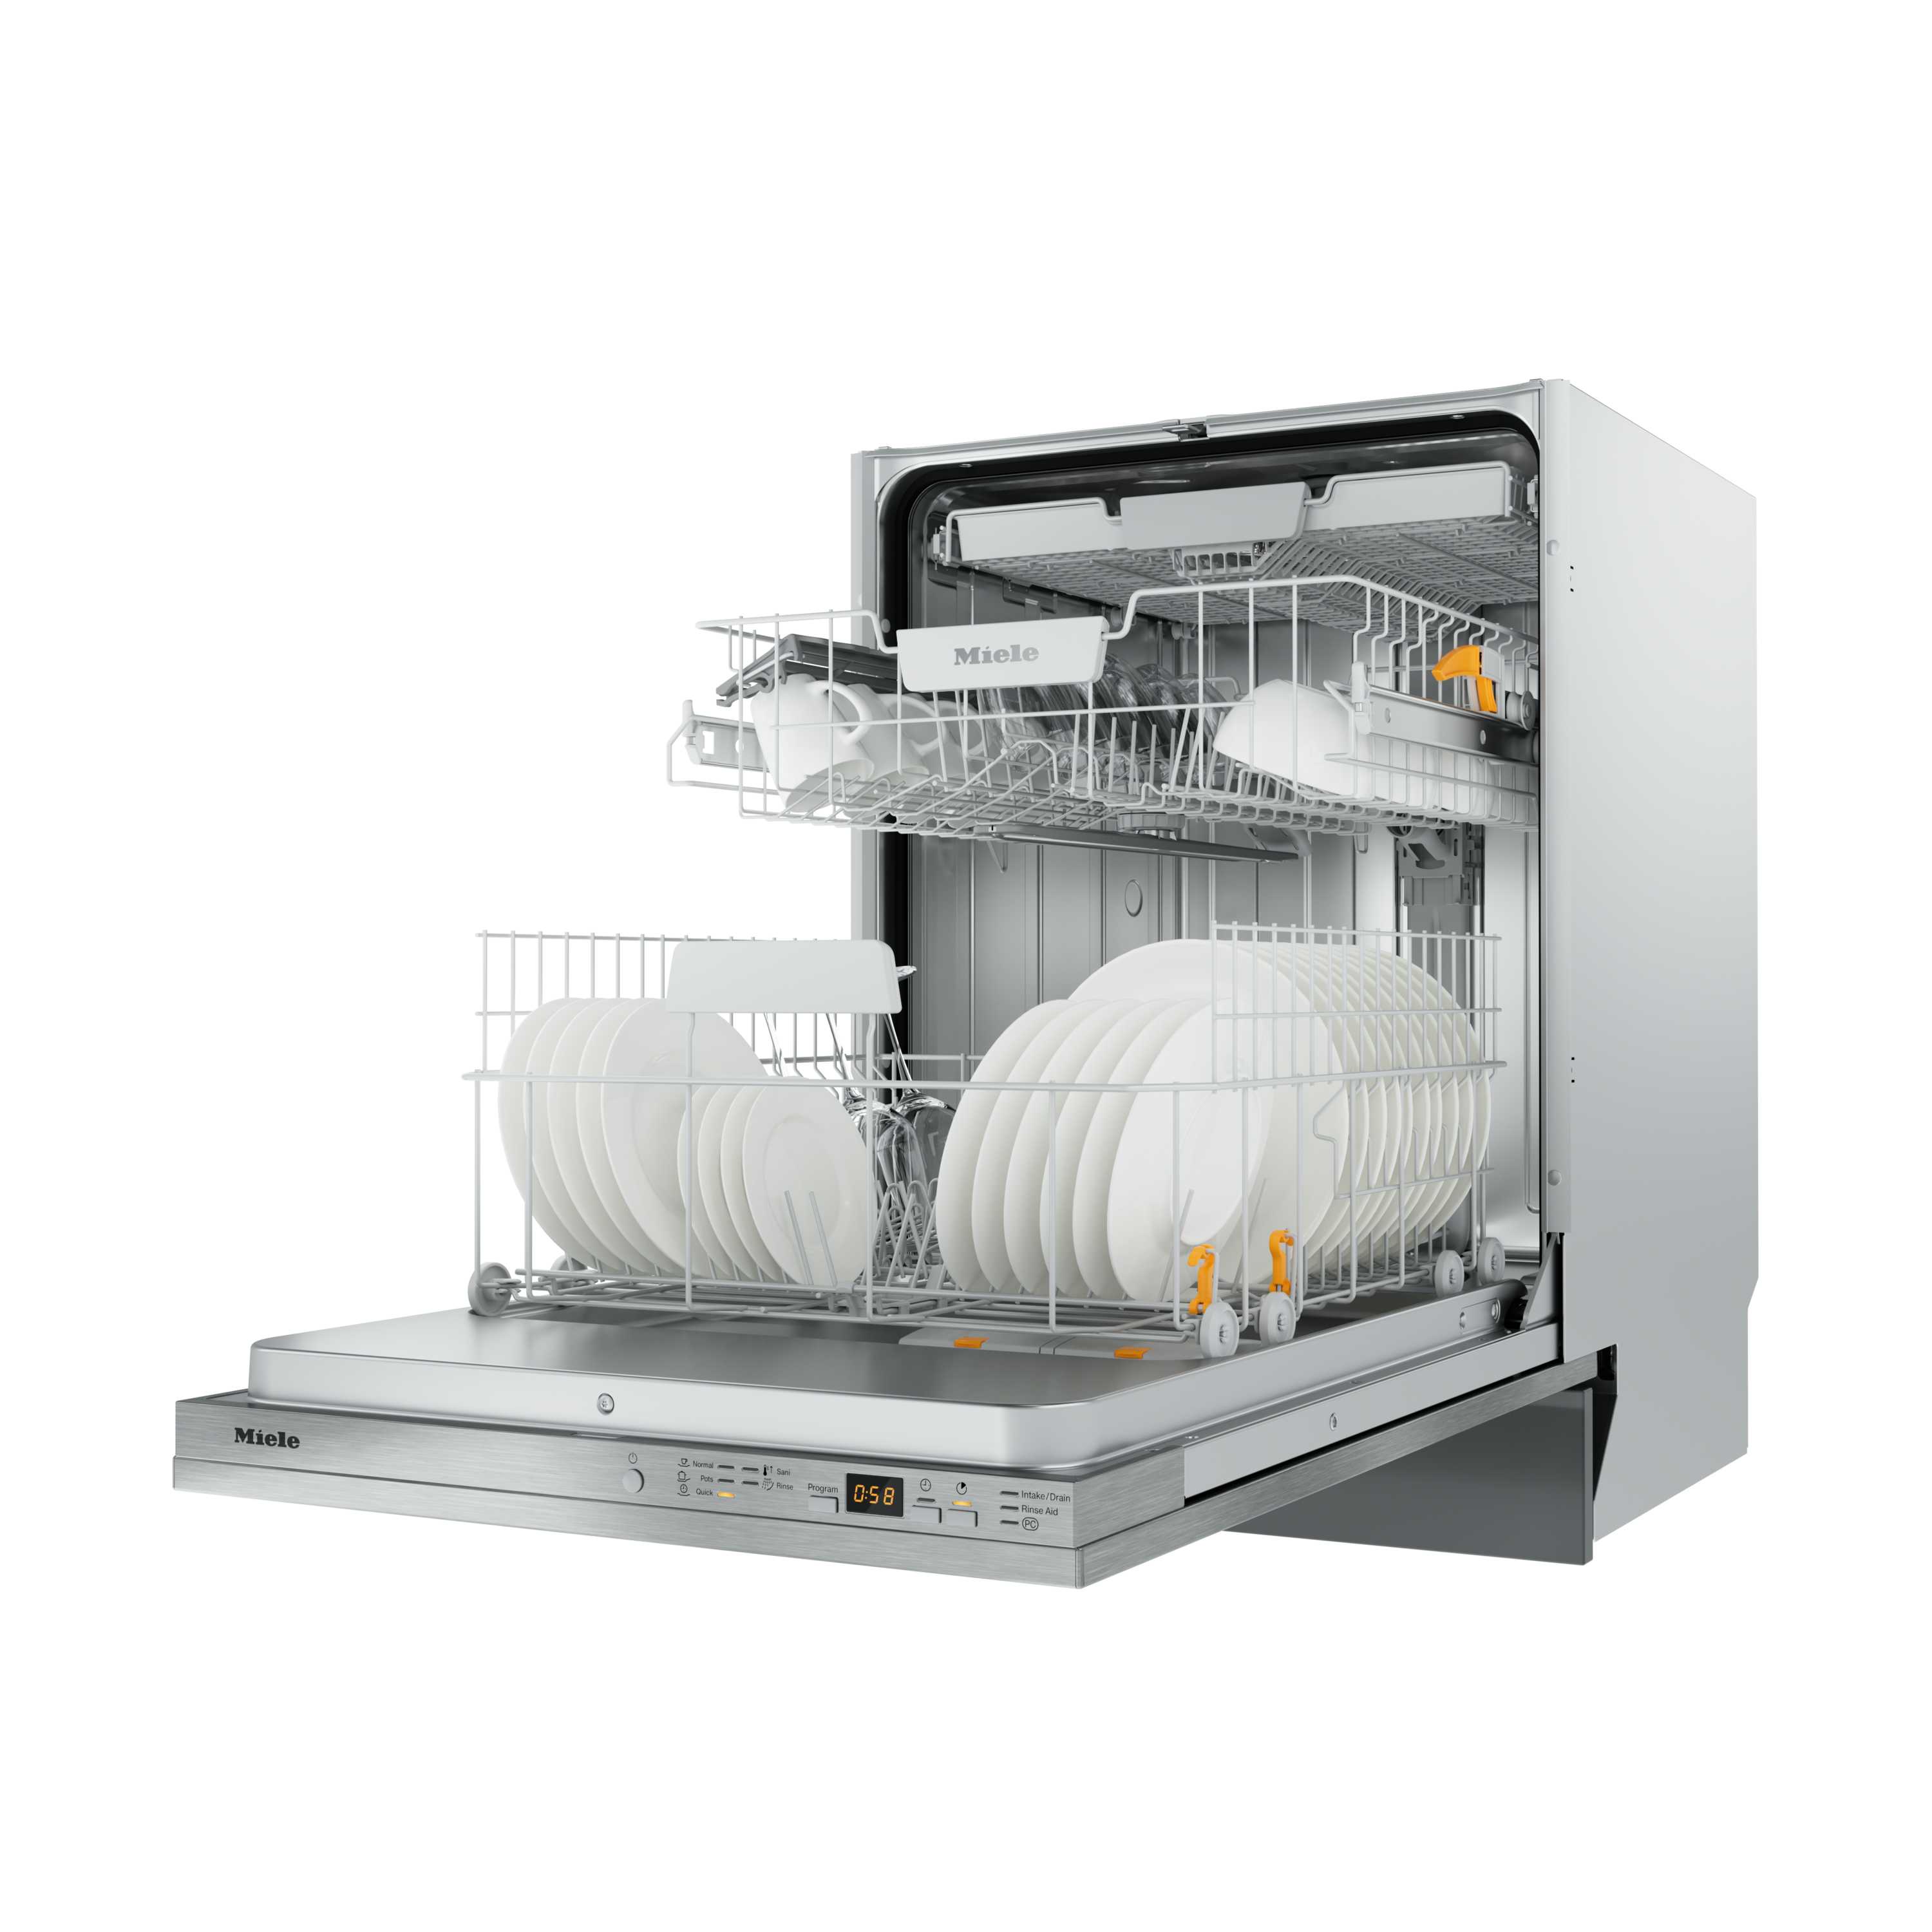 Miele 24 Built-in Dishwasher, Yale Appliance